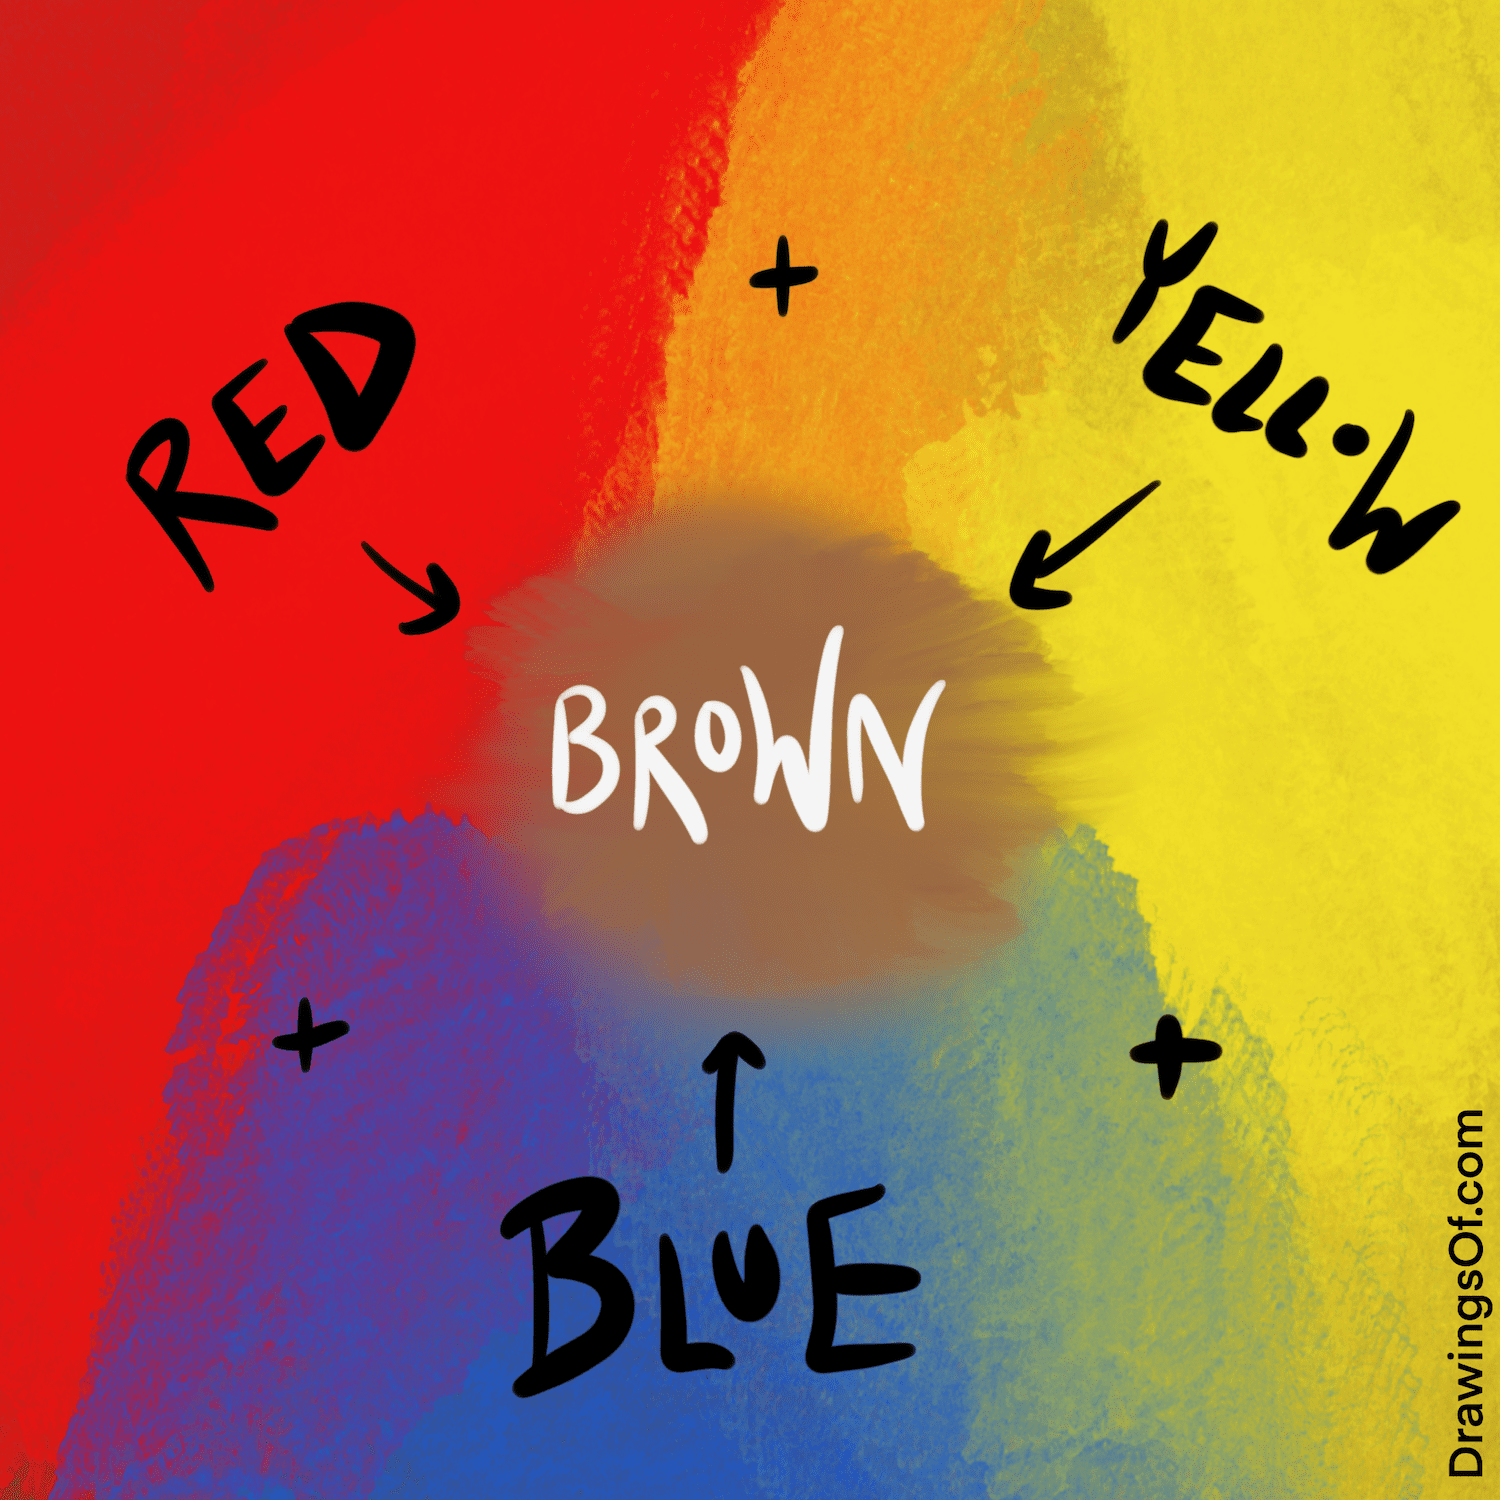 What colors make brown?